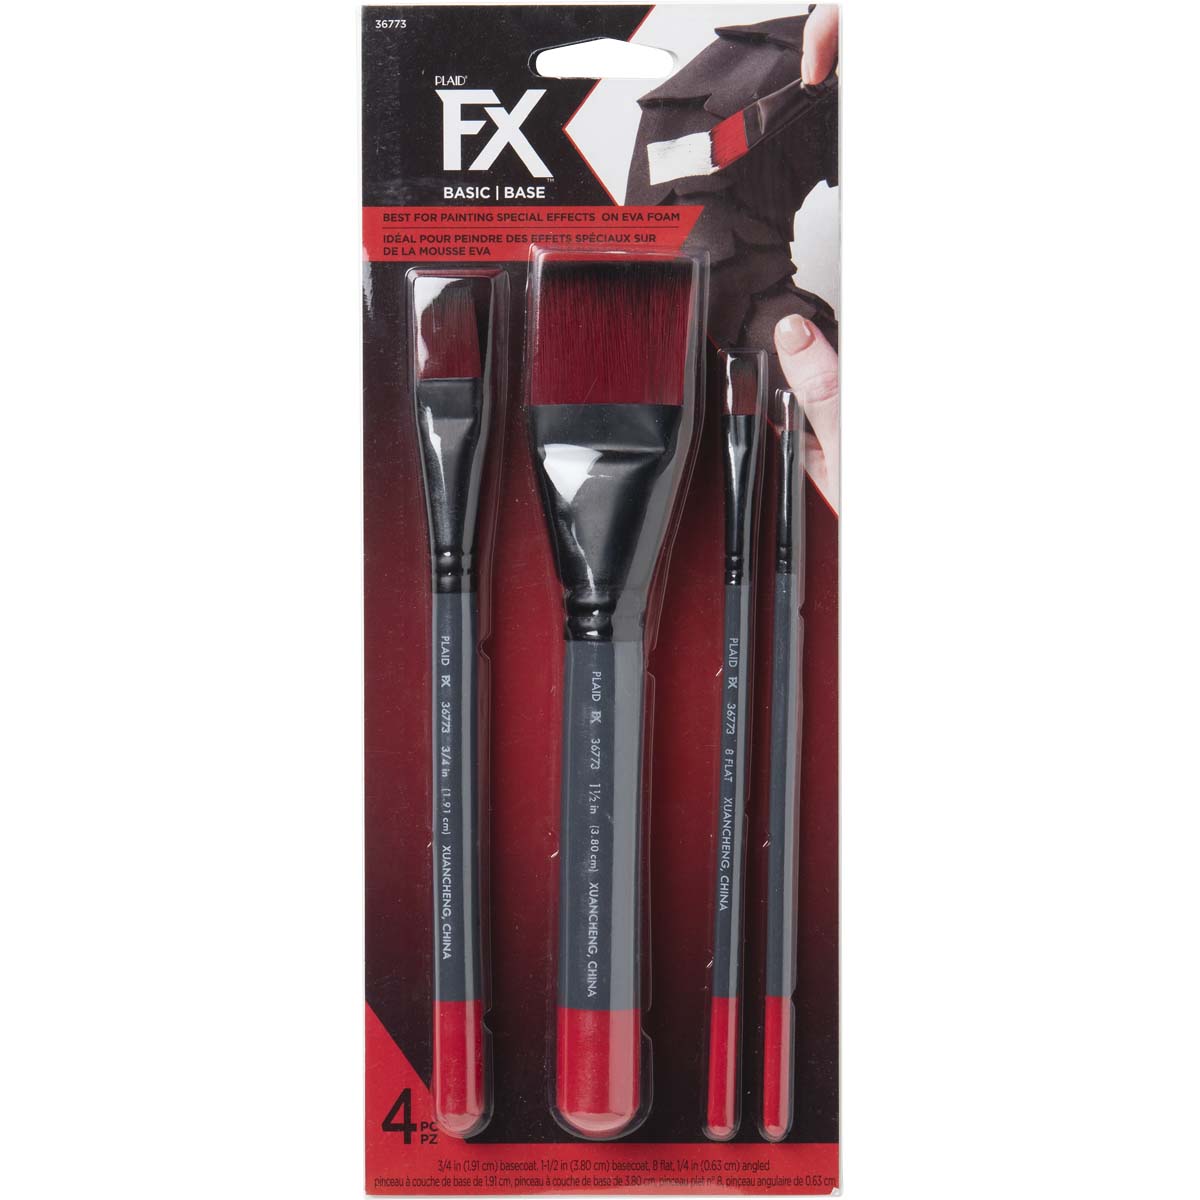 PlaidFX Brush Sets - Basic Set, 4 pc. - 36773